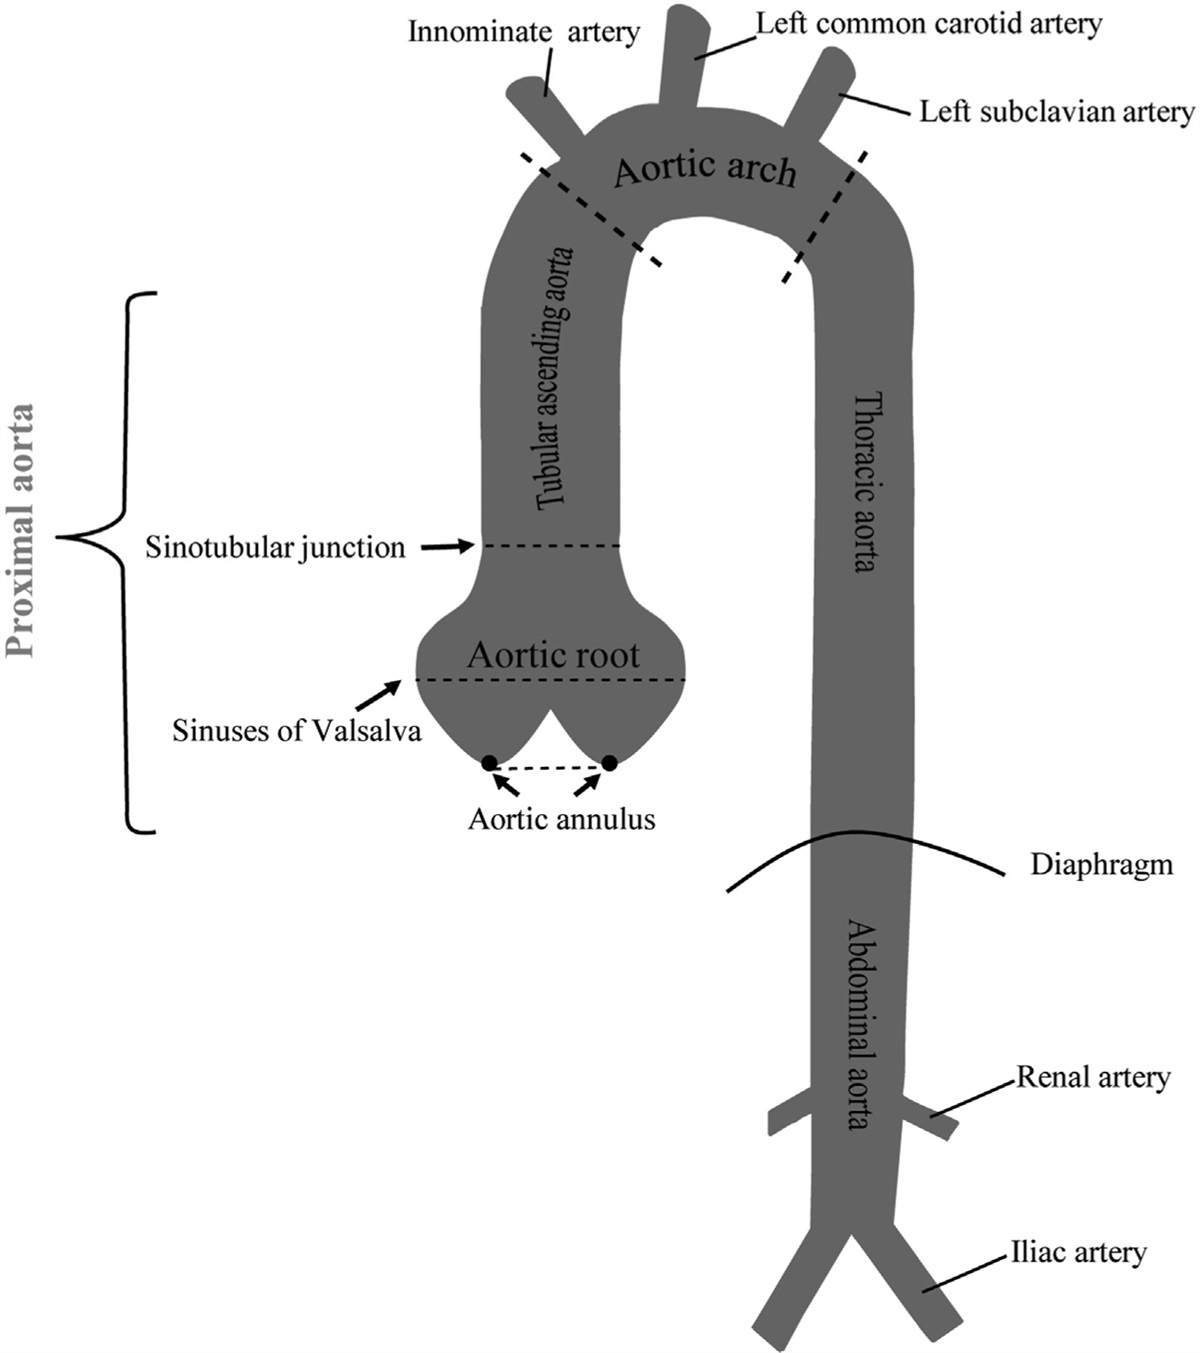 Proximal aorta dilatation in hypertension